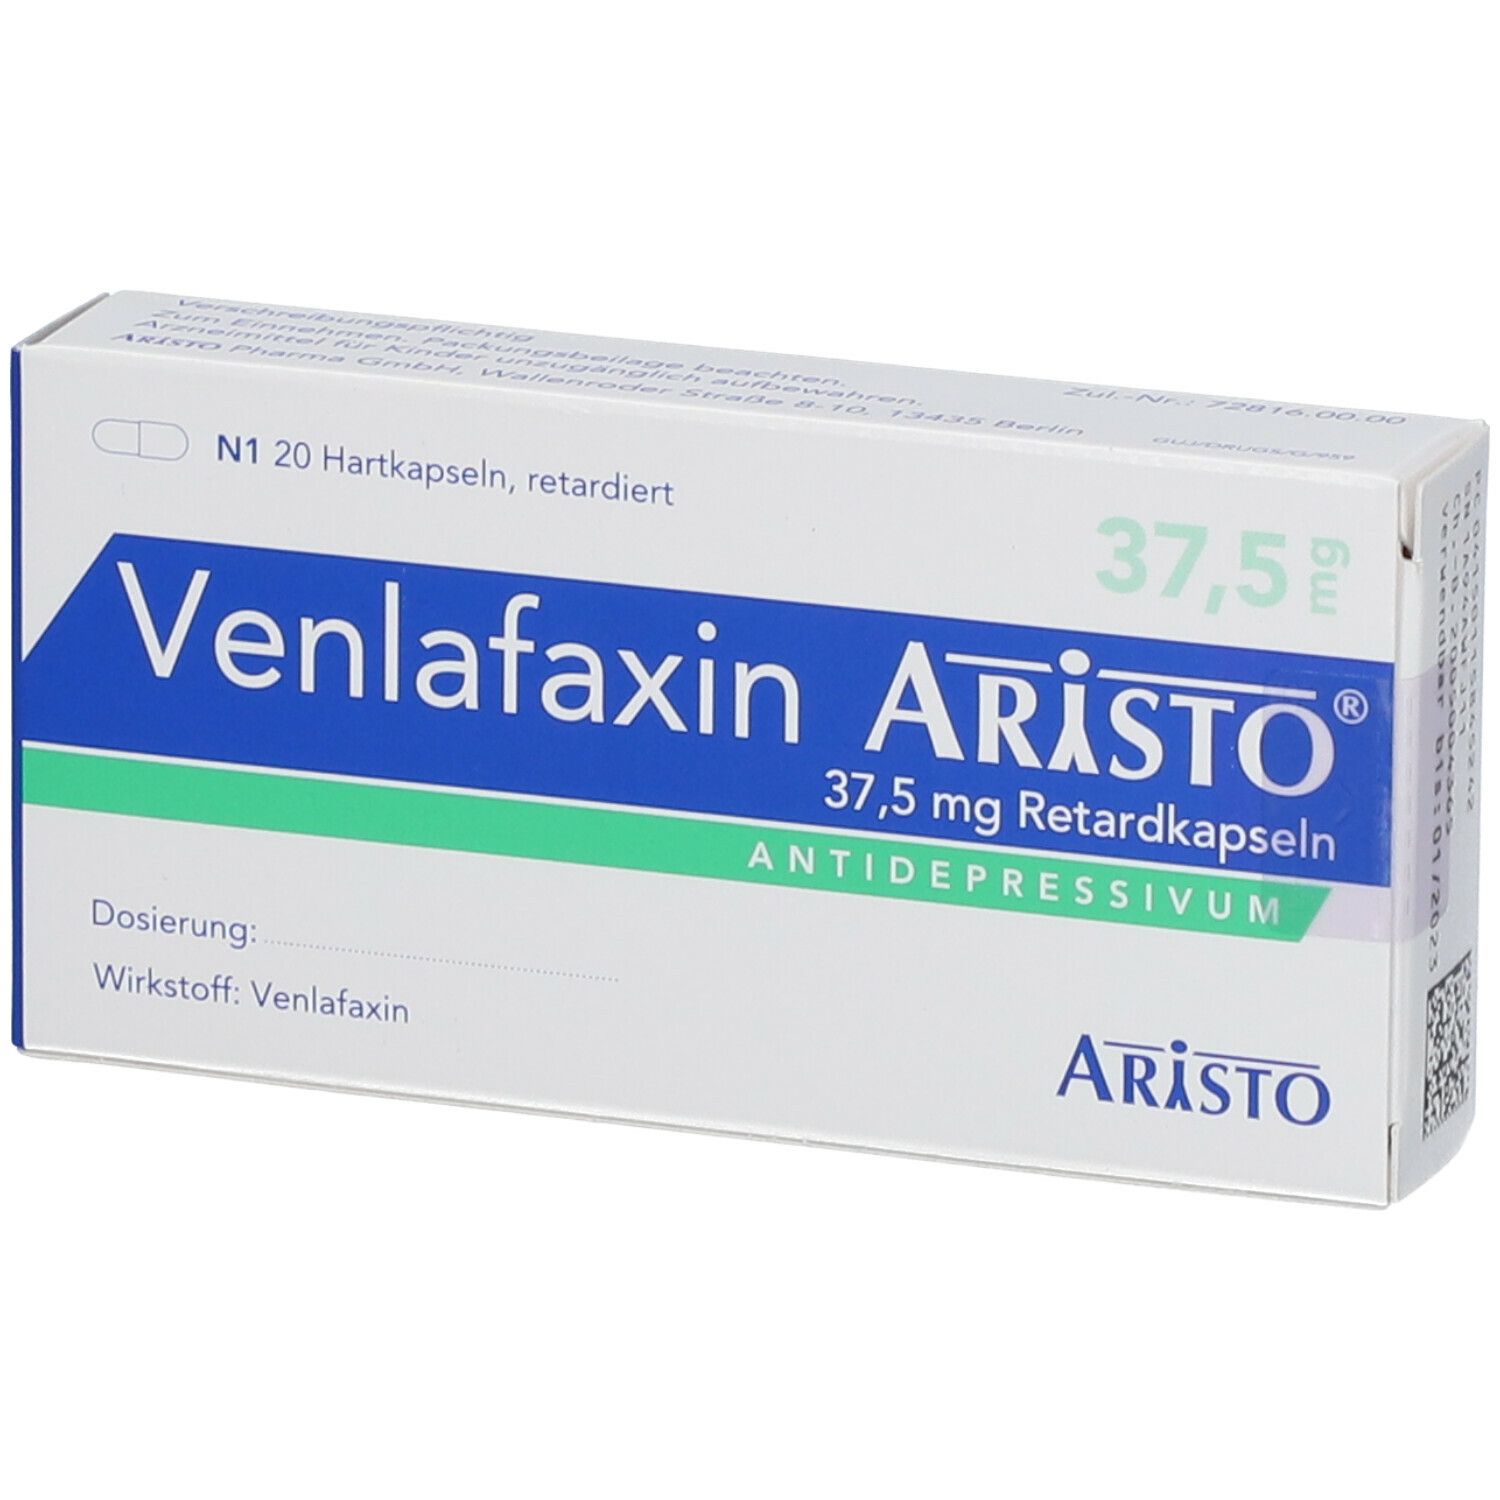 Venlafaxin Aristo® 37,5 mg